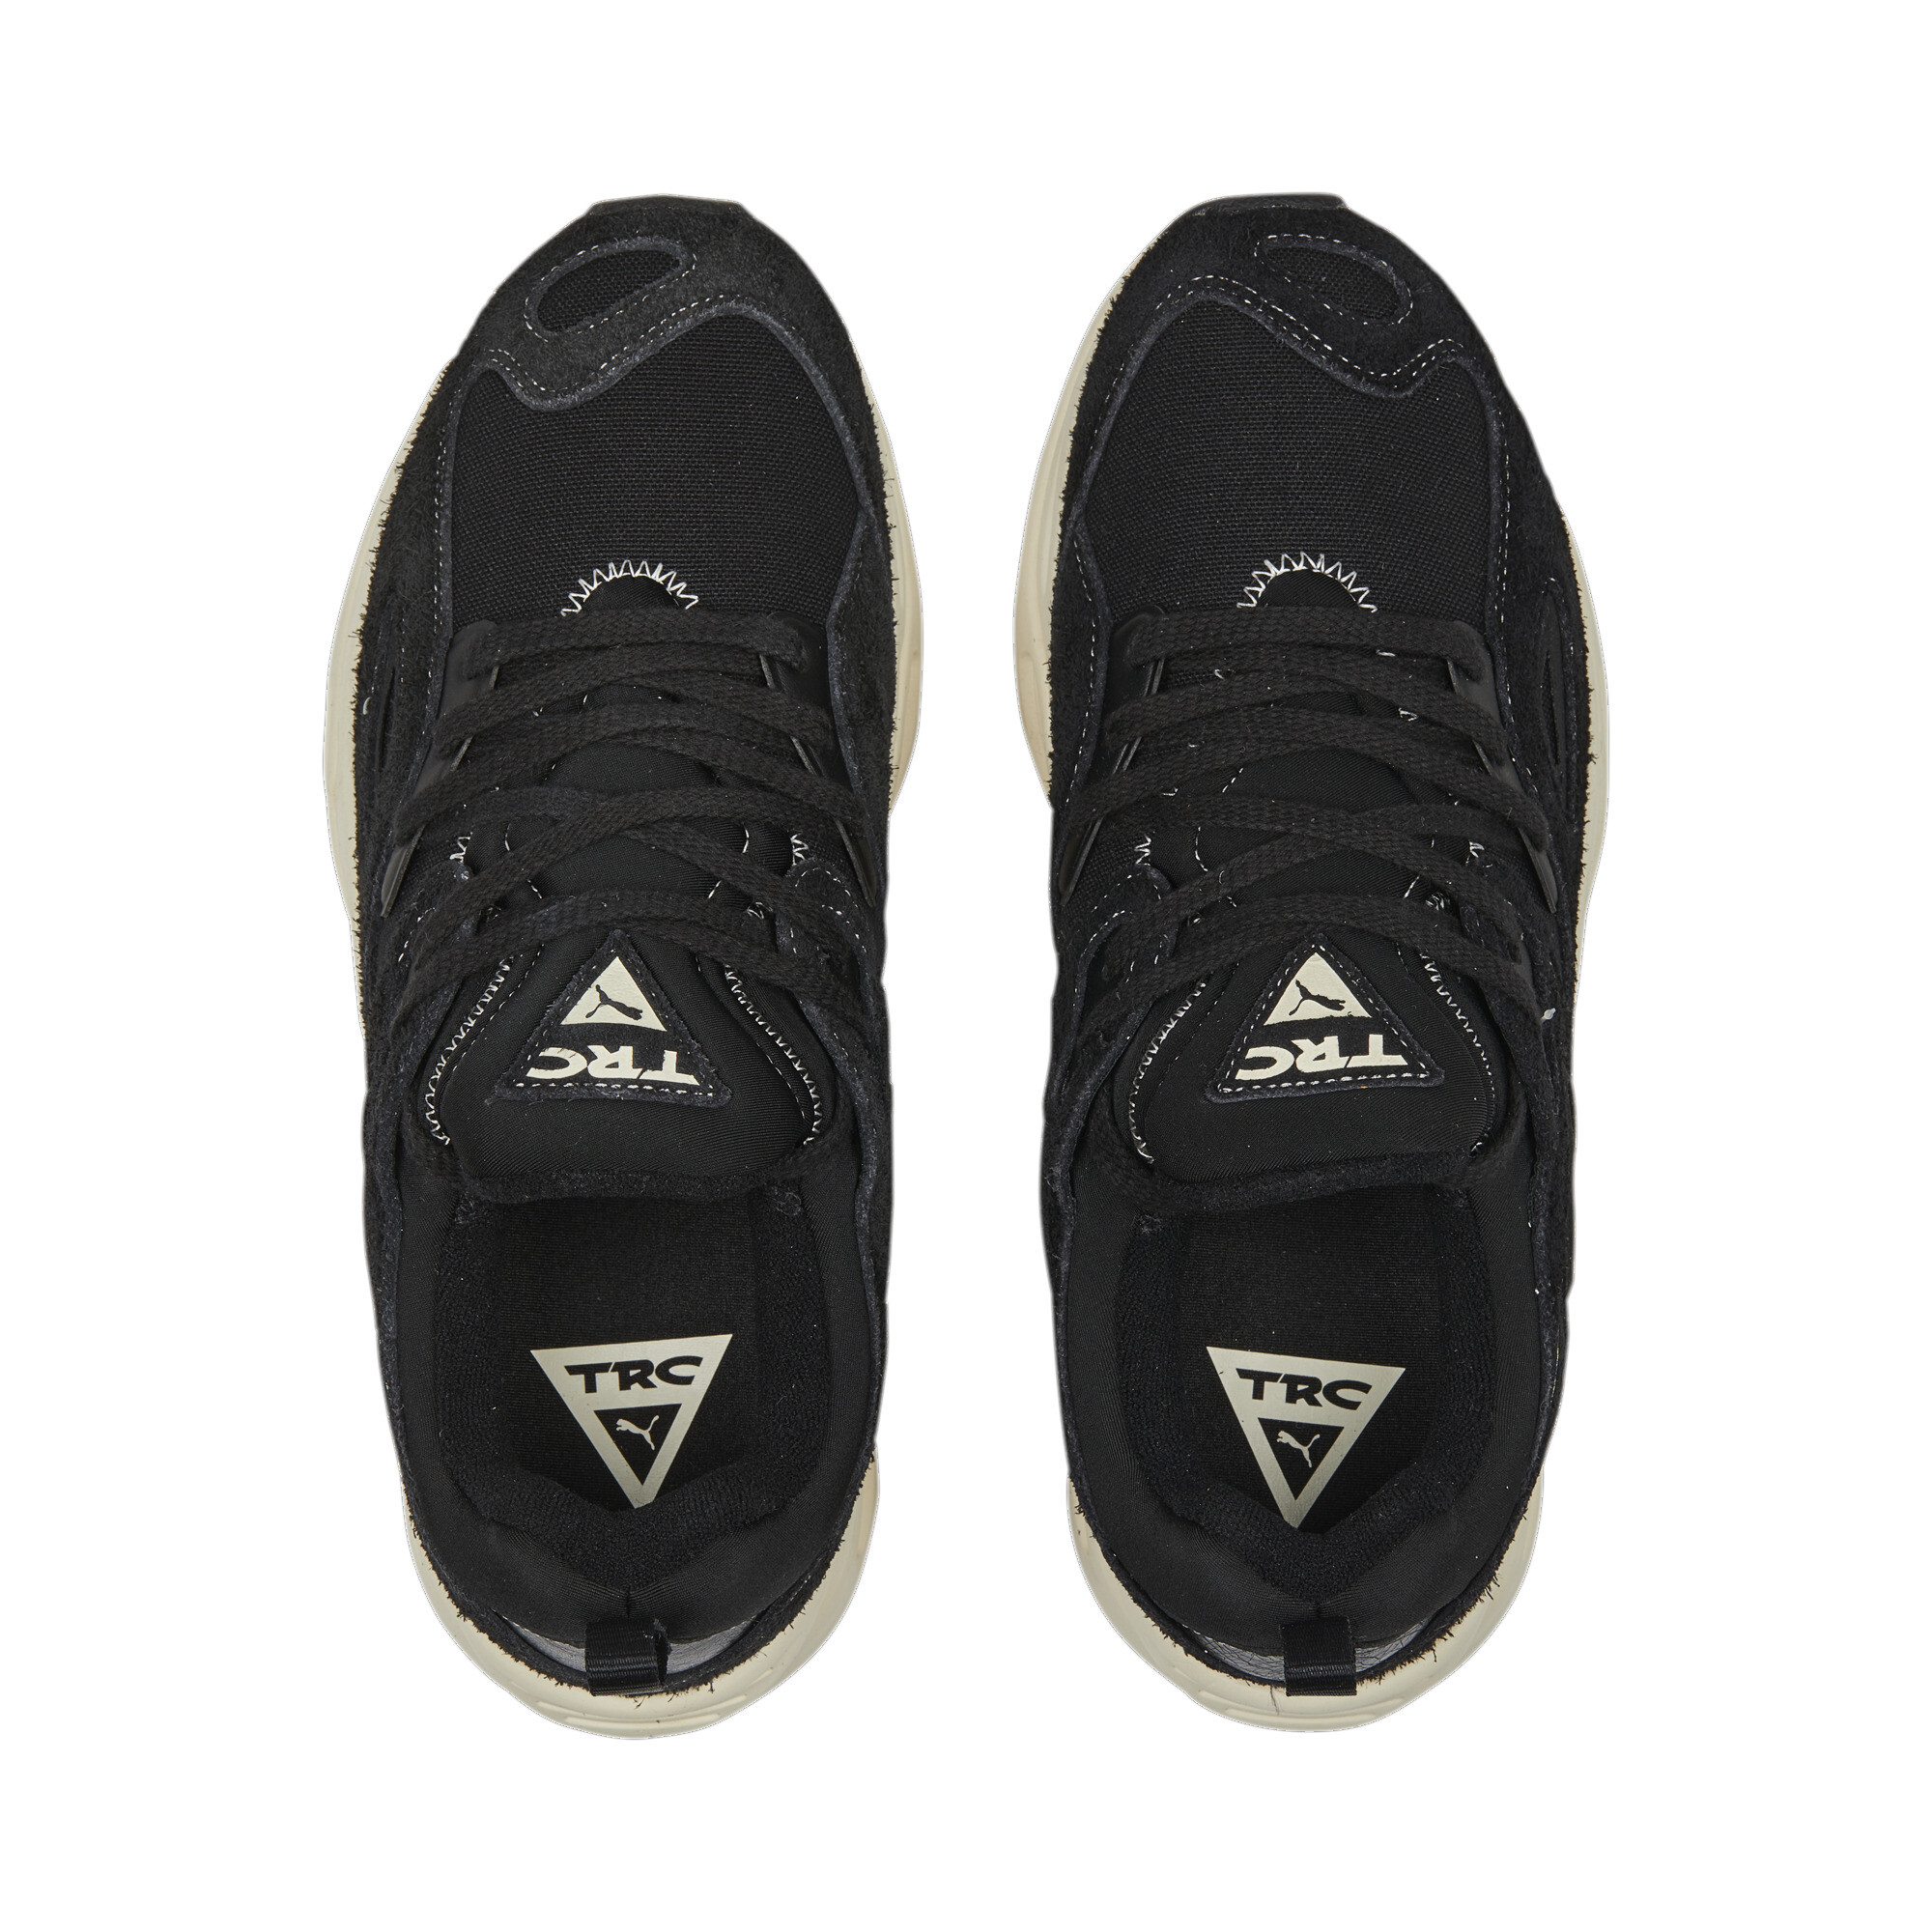 Men's PUMA TRC Blaze Worn Out Sneakers In 10 - Black, Size EU 44.5